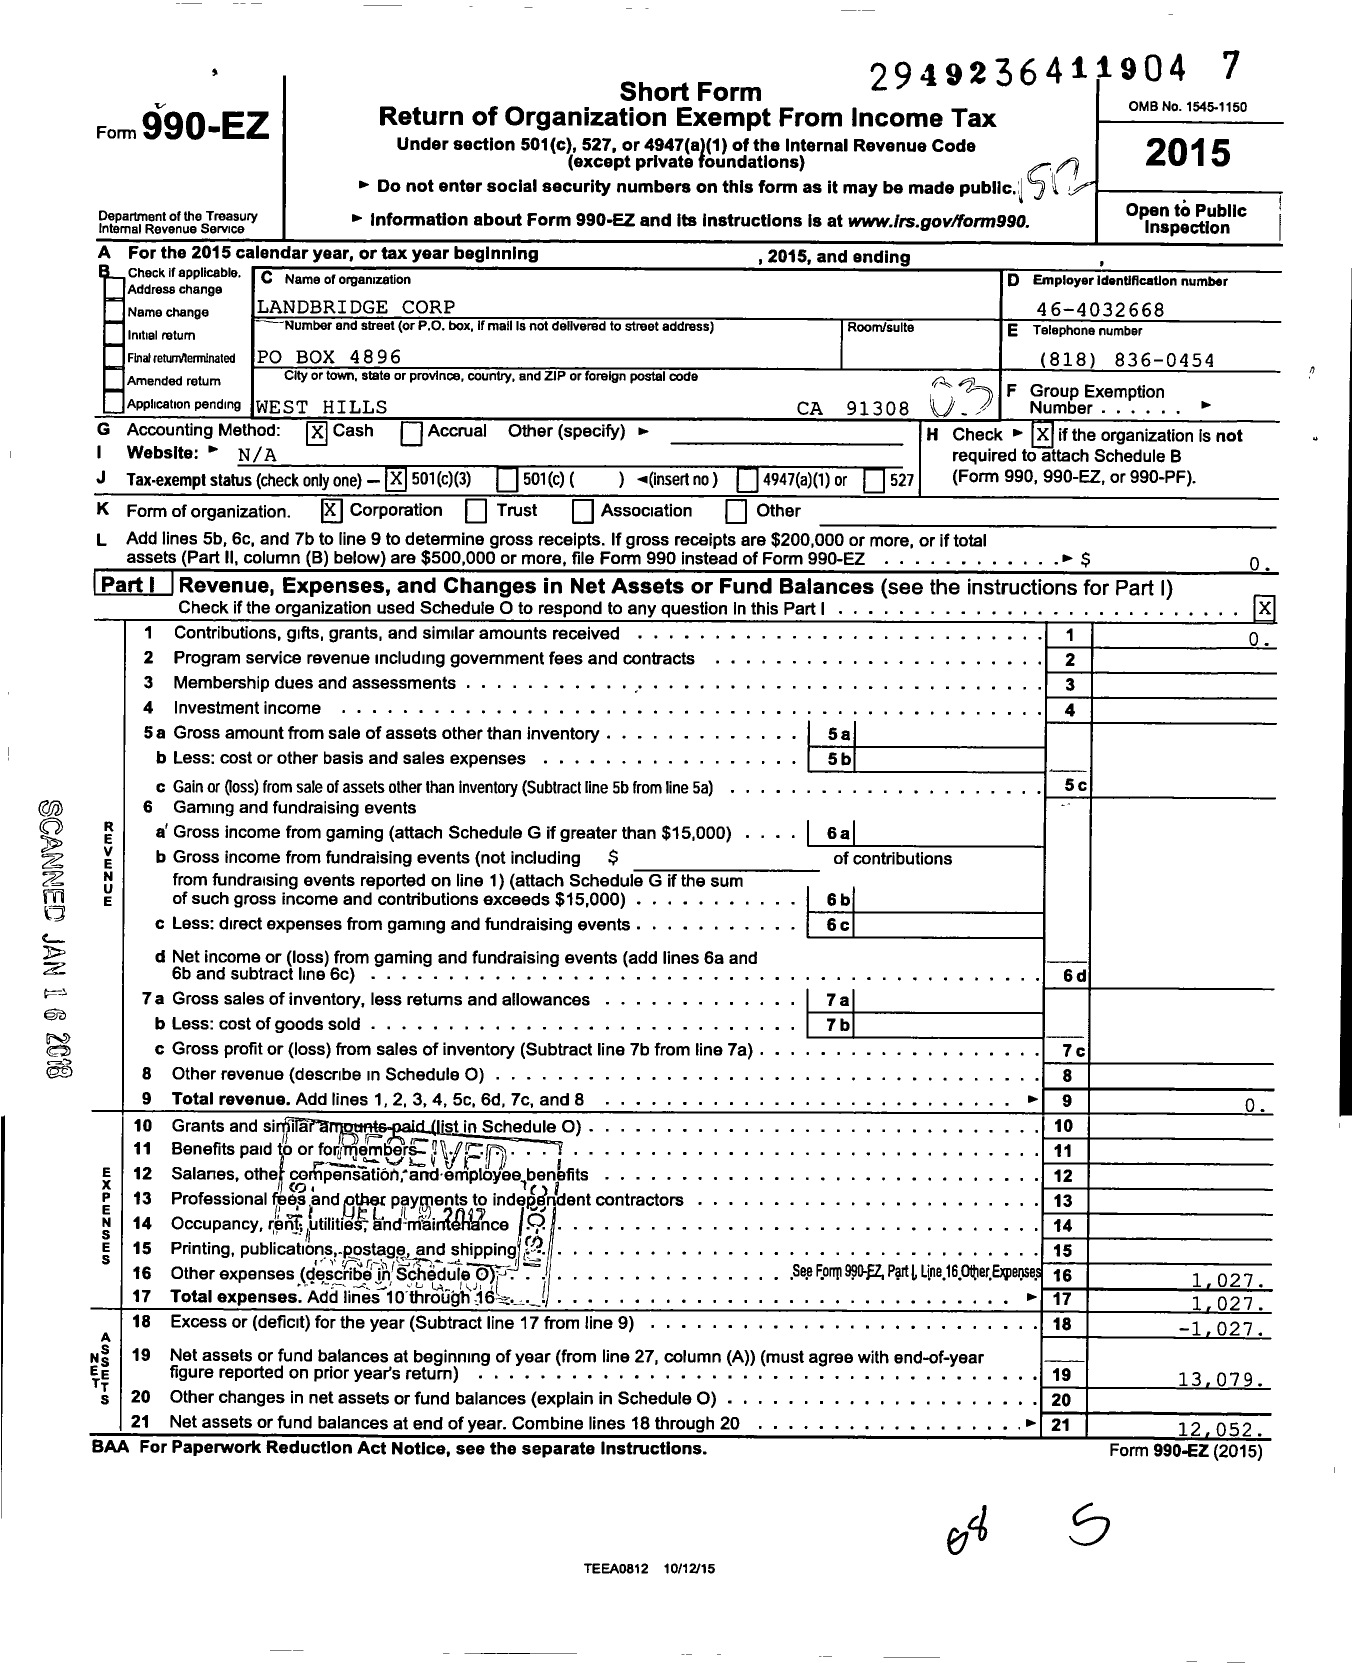 Image of first page of 2015 Form 990EZ for Landbridge Corporation